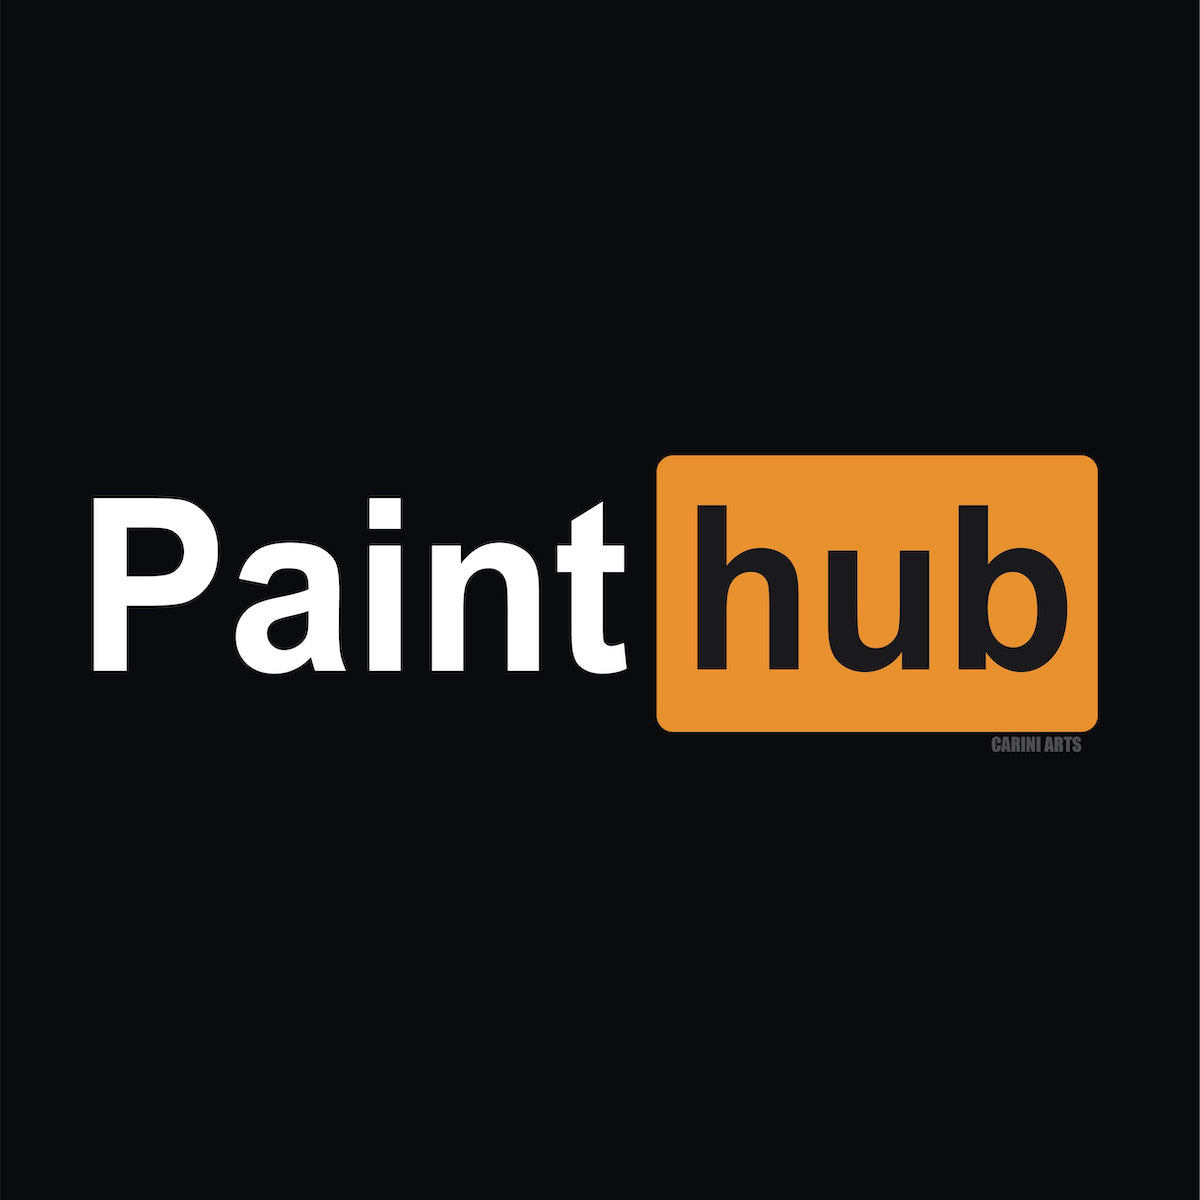 Paint Hub artist tee by Michael Carini of Carini Arts in San Diego, CA 